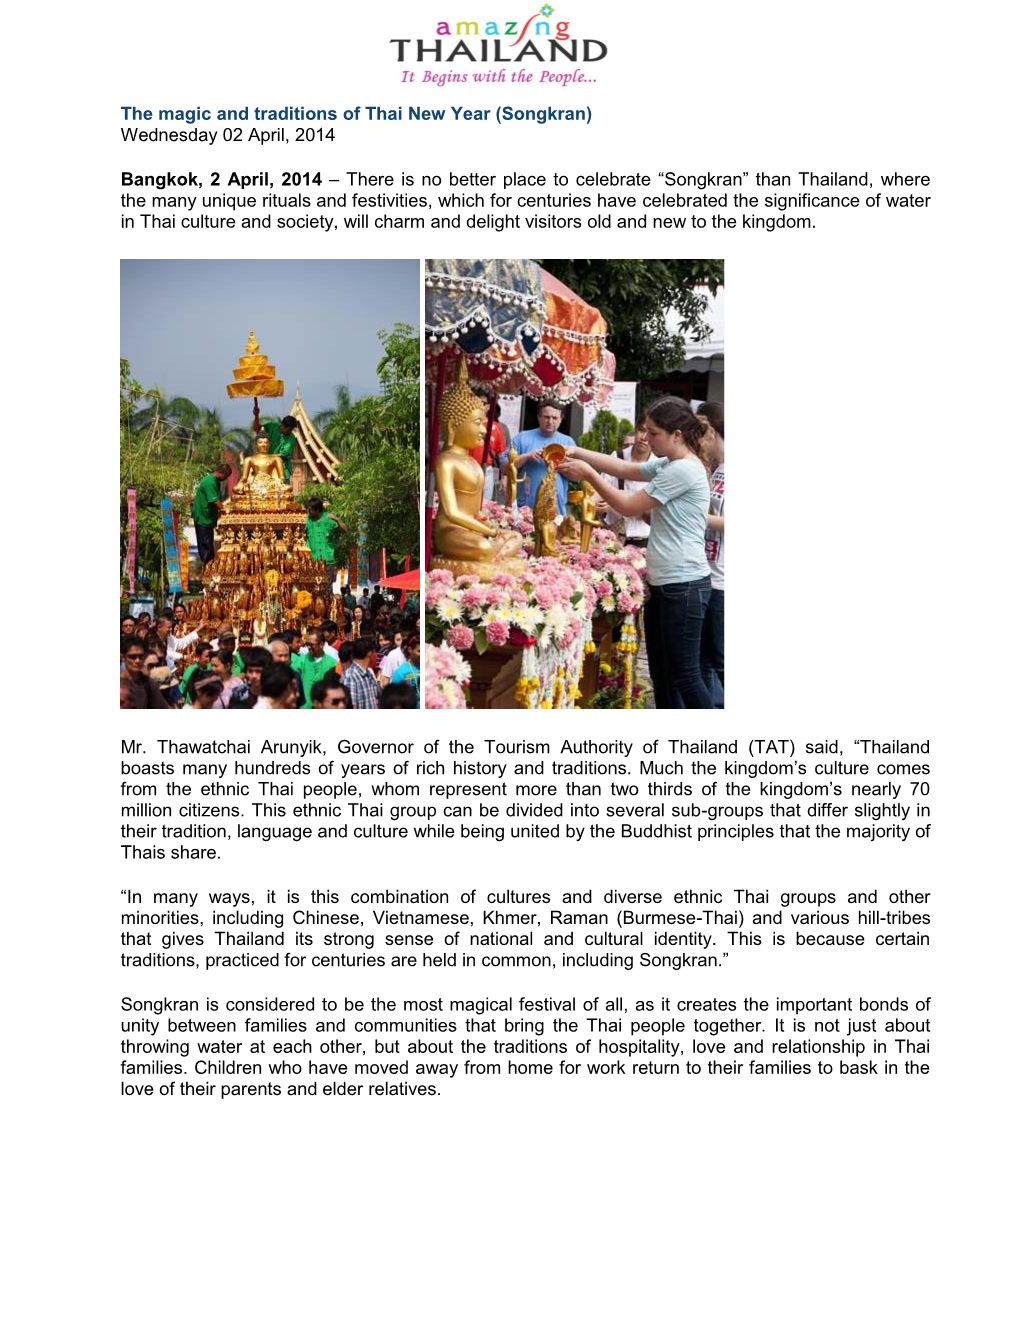 Songkran) Wednesday 02 April, 2014